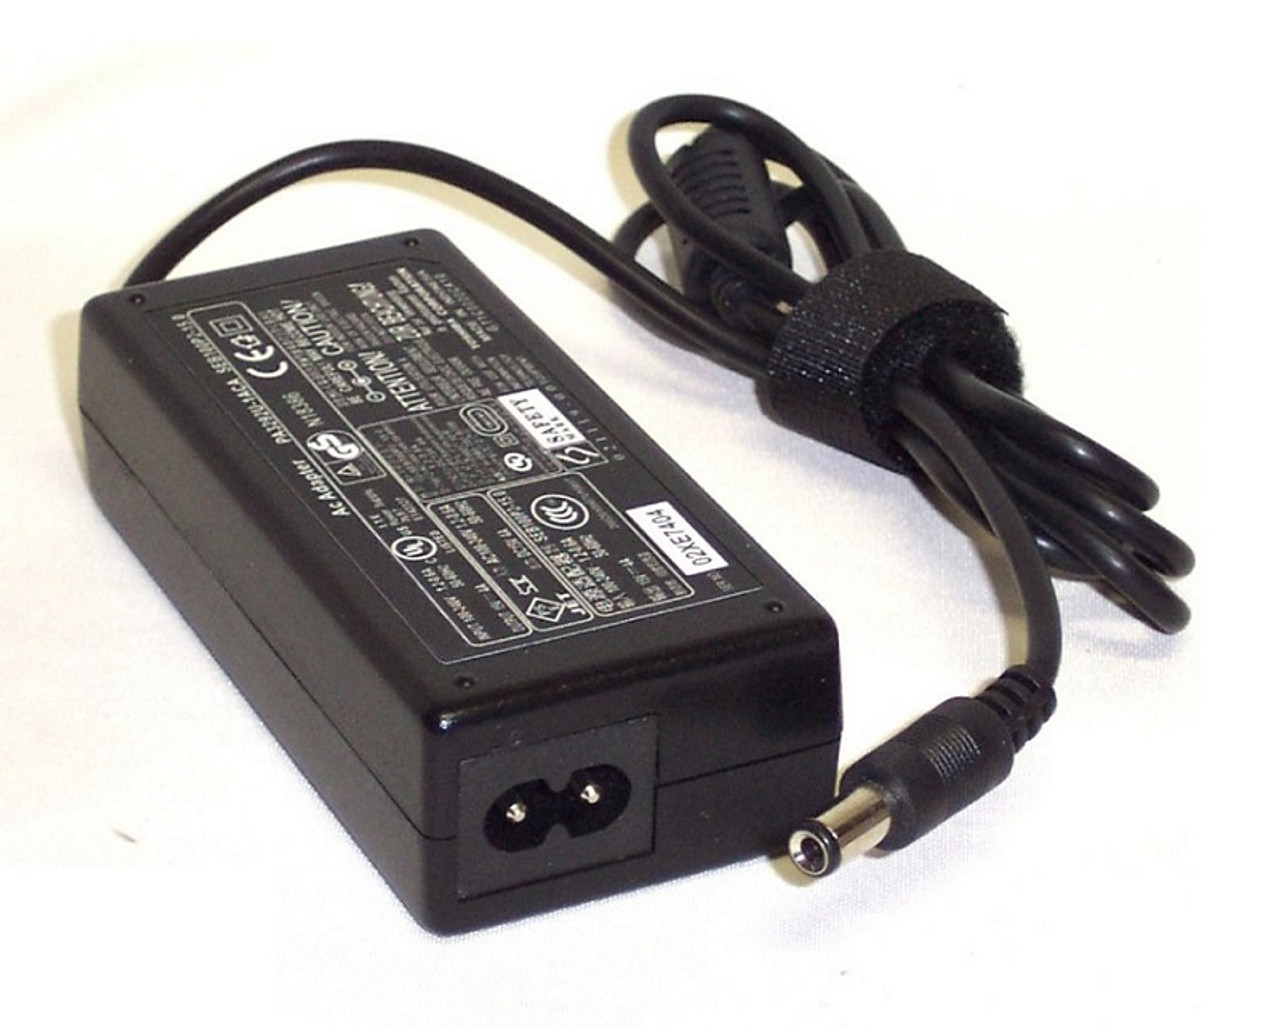 677770-003 - HP 65-Watts AC Adapter